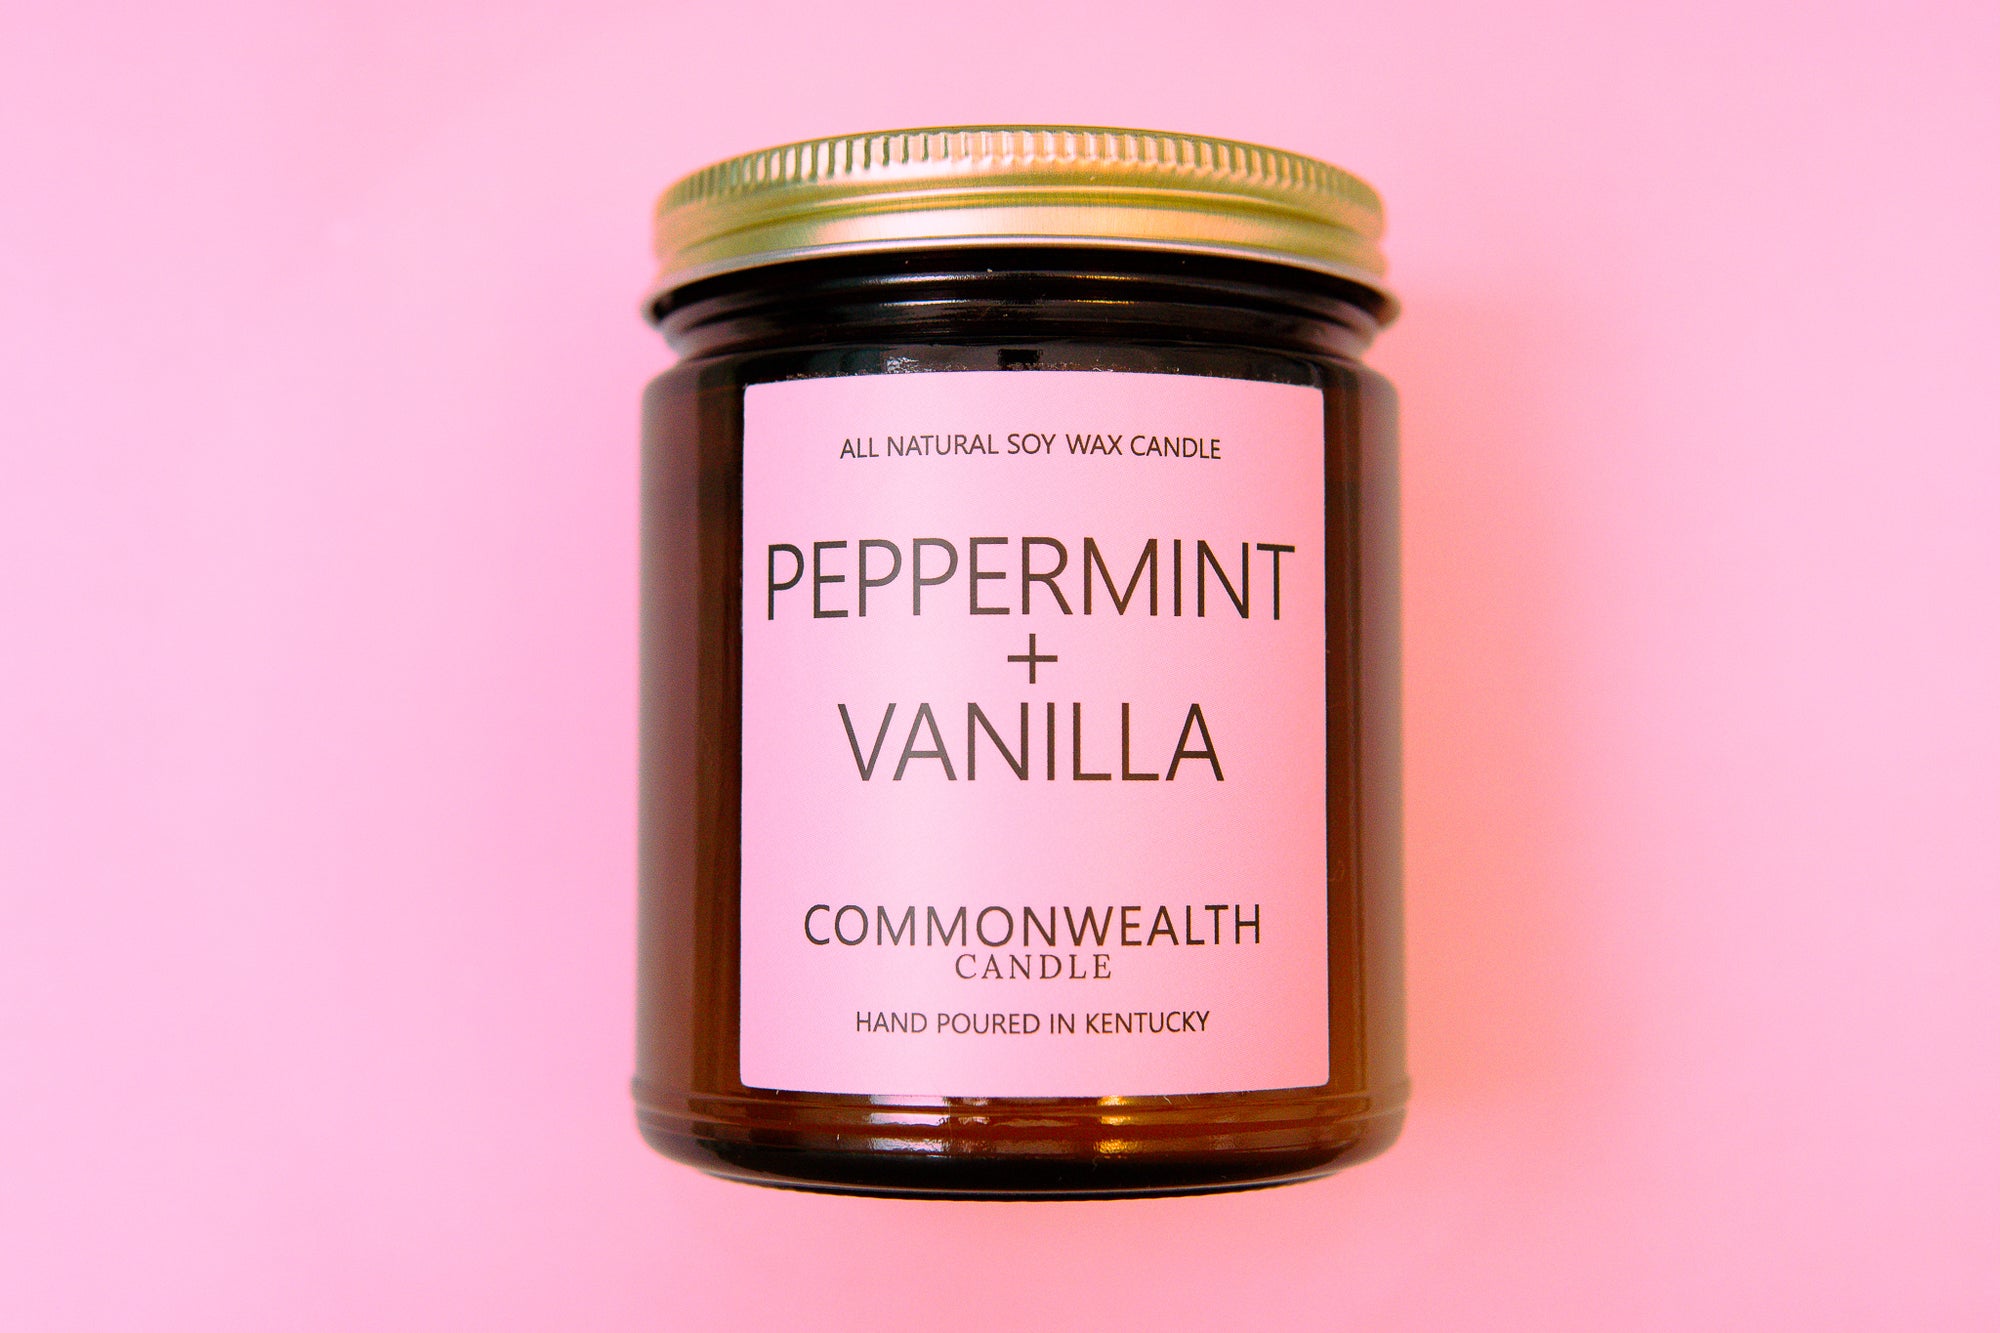 Peppermint + Vanilla